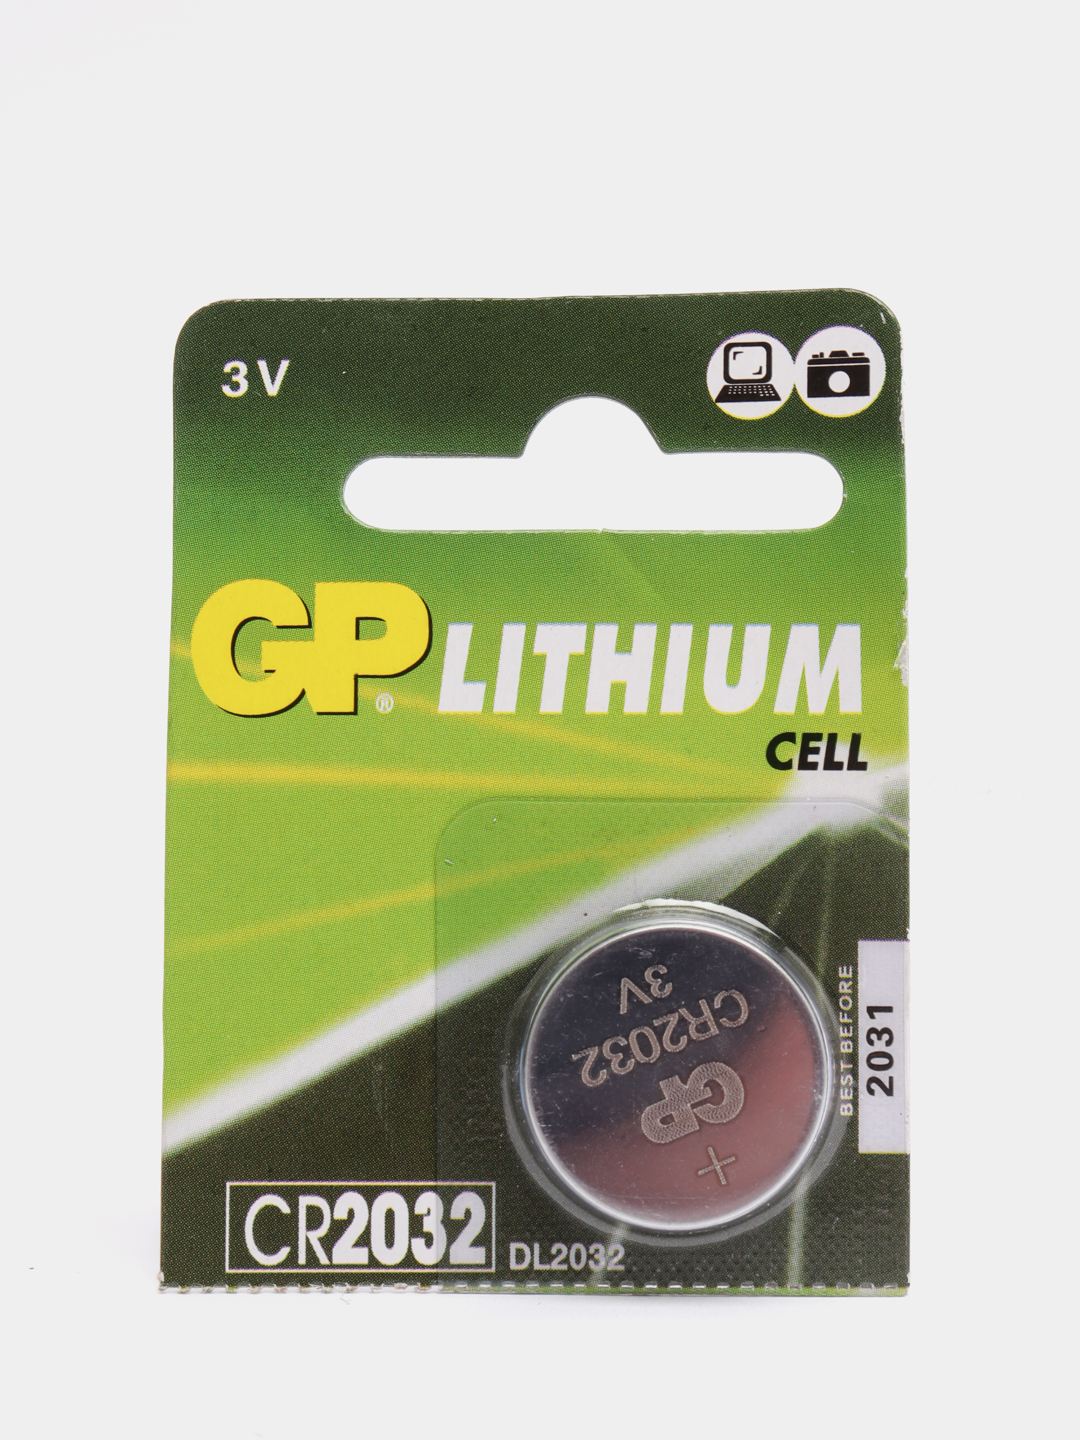  CR2032, литиевый элемент питания GP, таблетка 2032 за 49 .